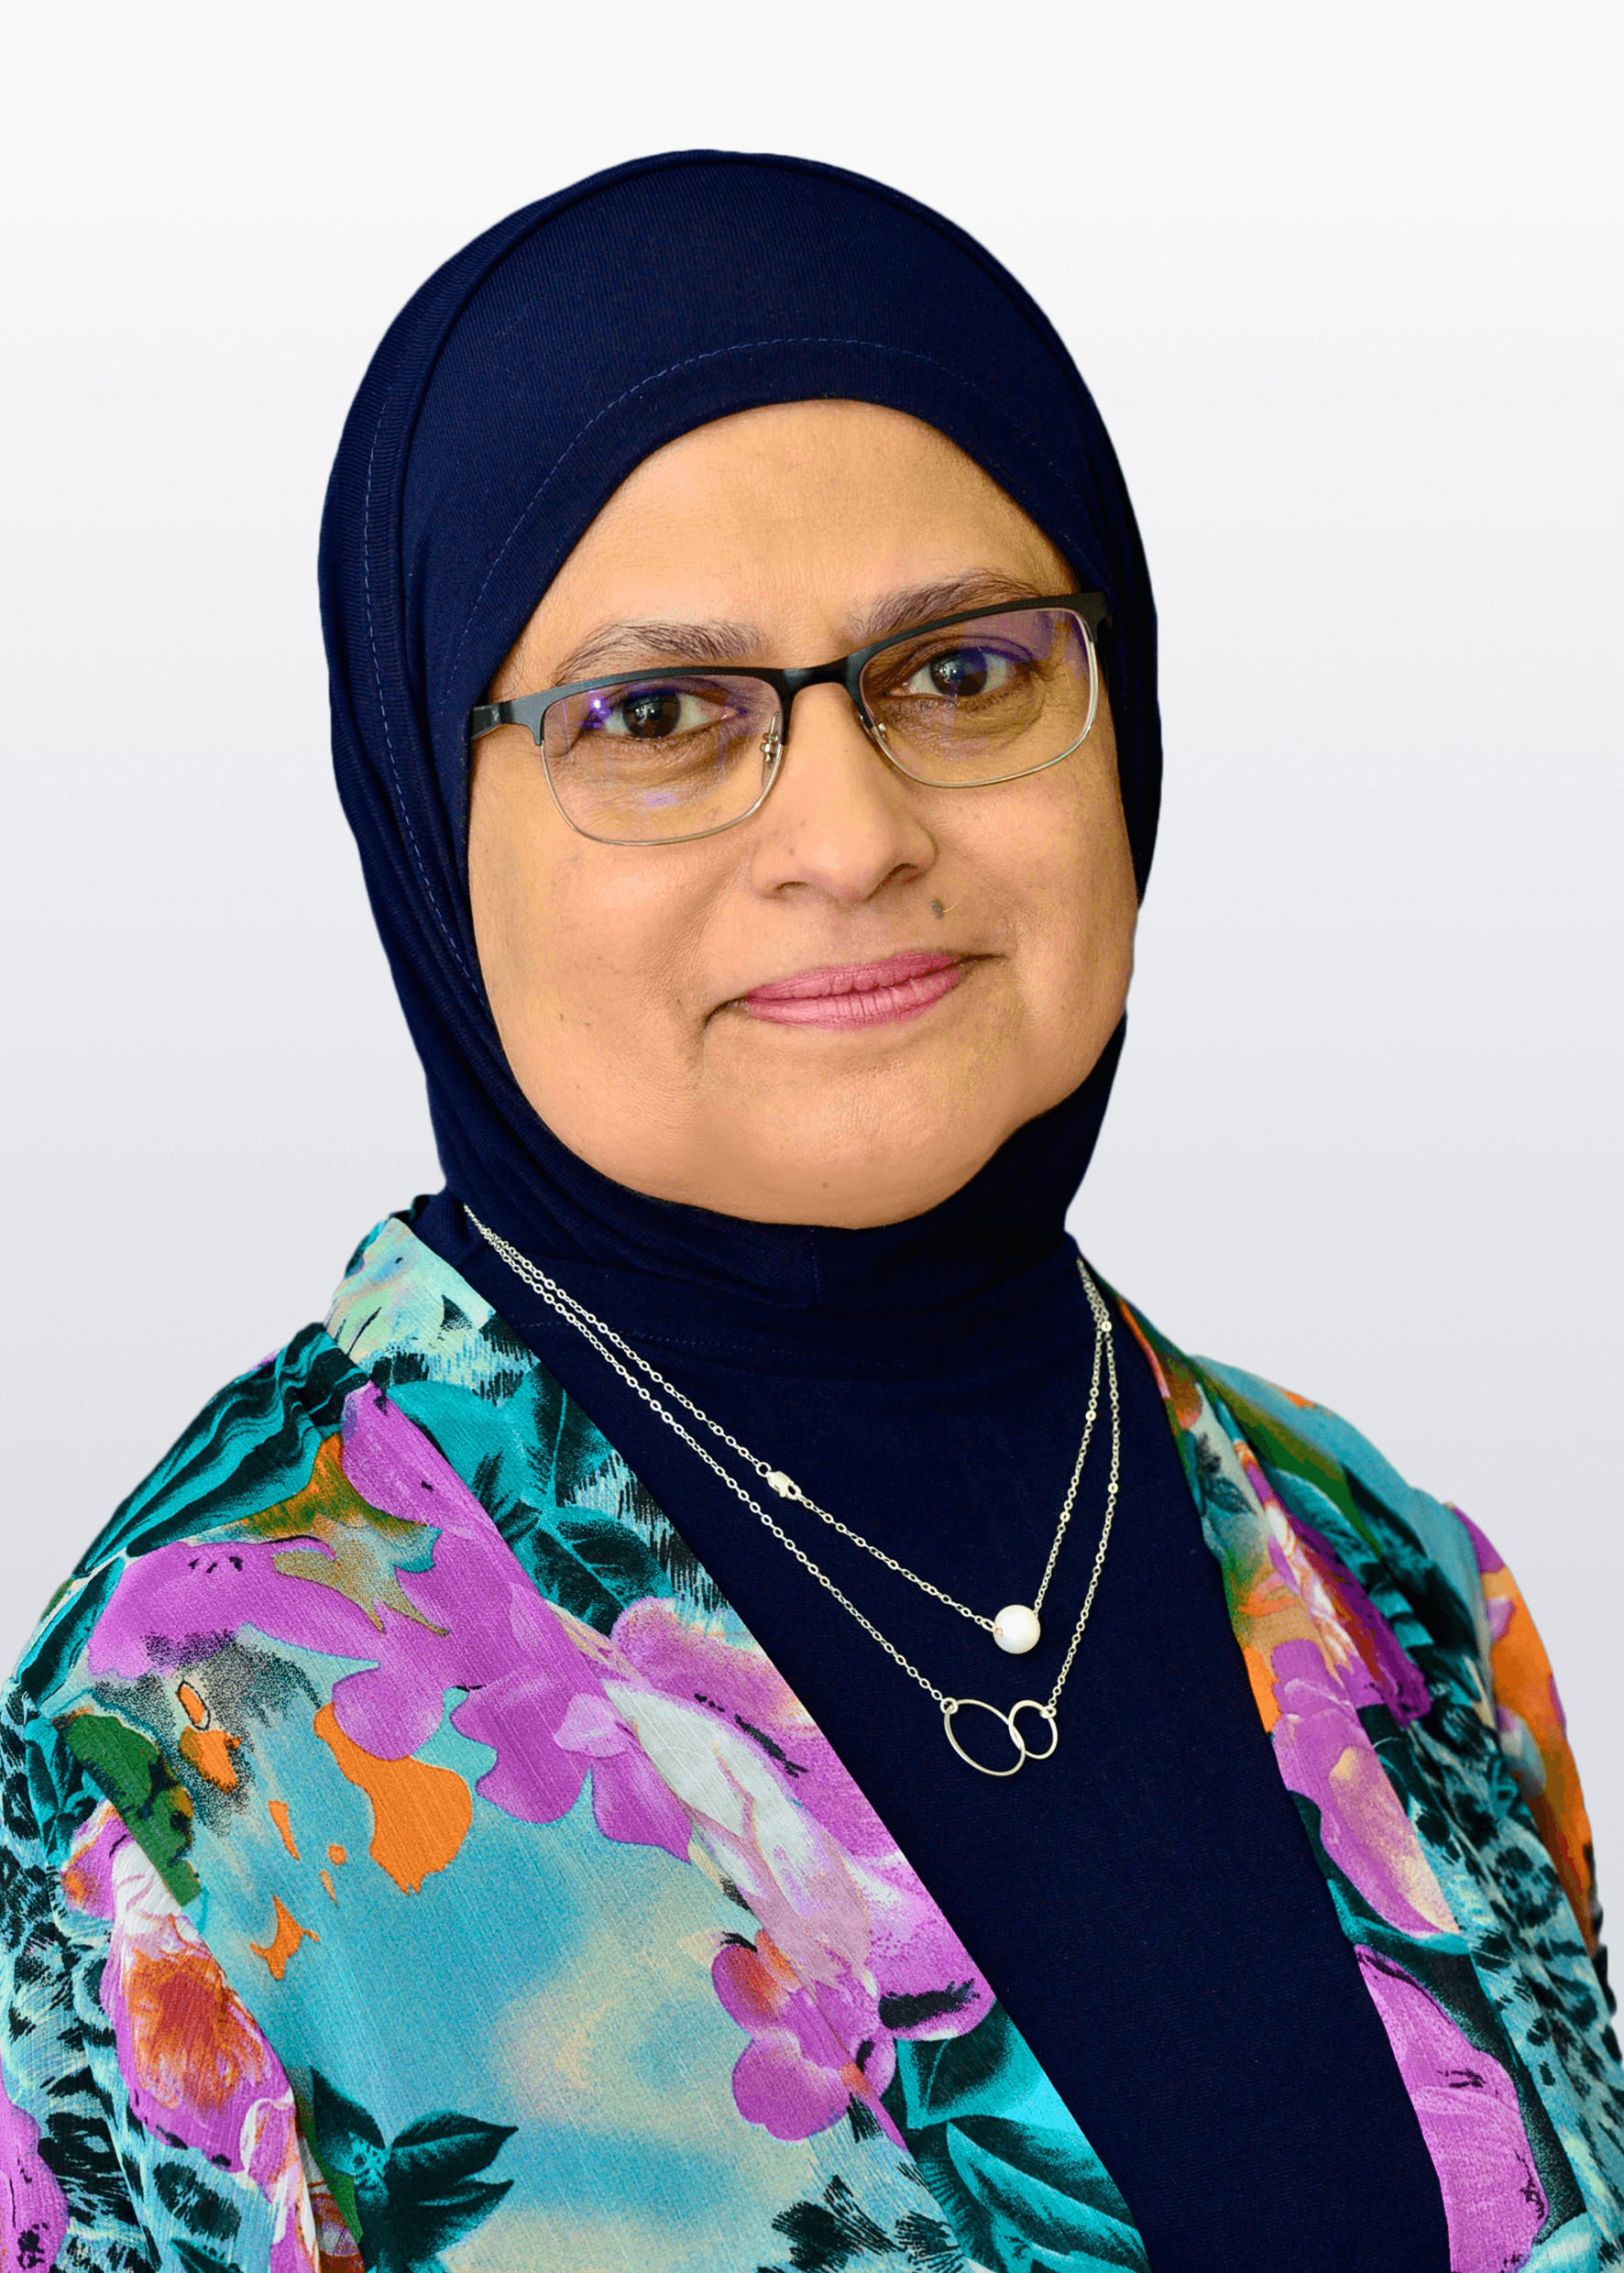 Participant Profiles - Professor Sabiha Essack